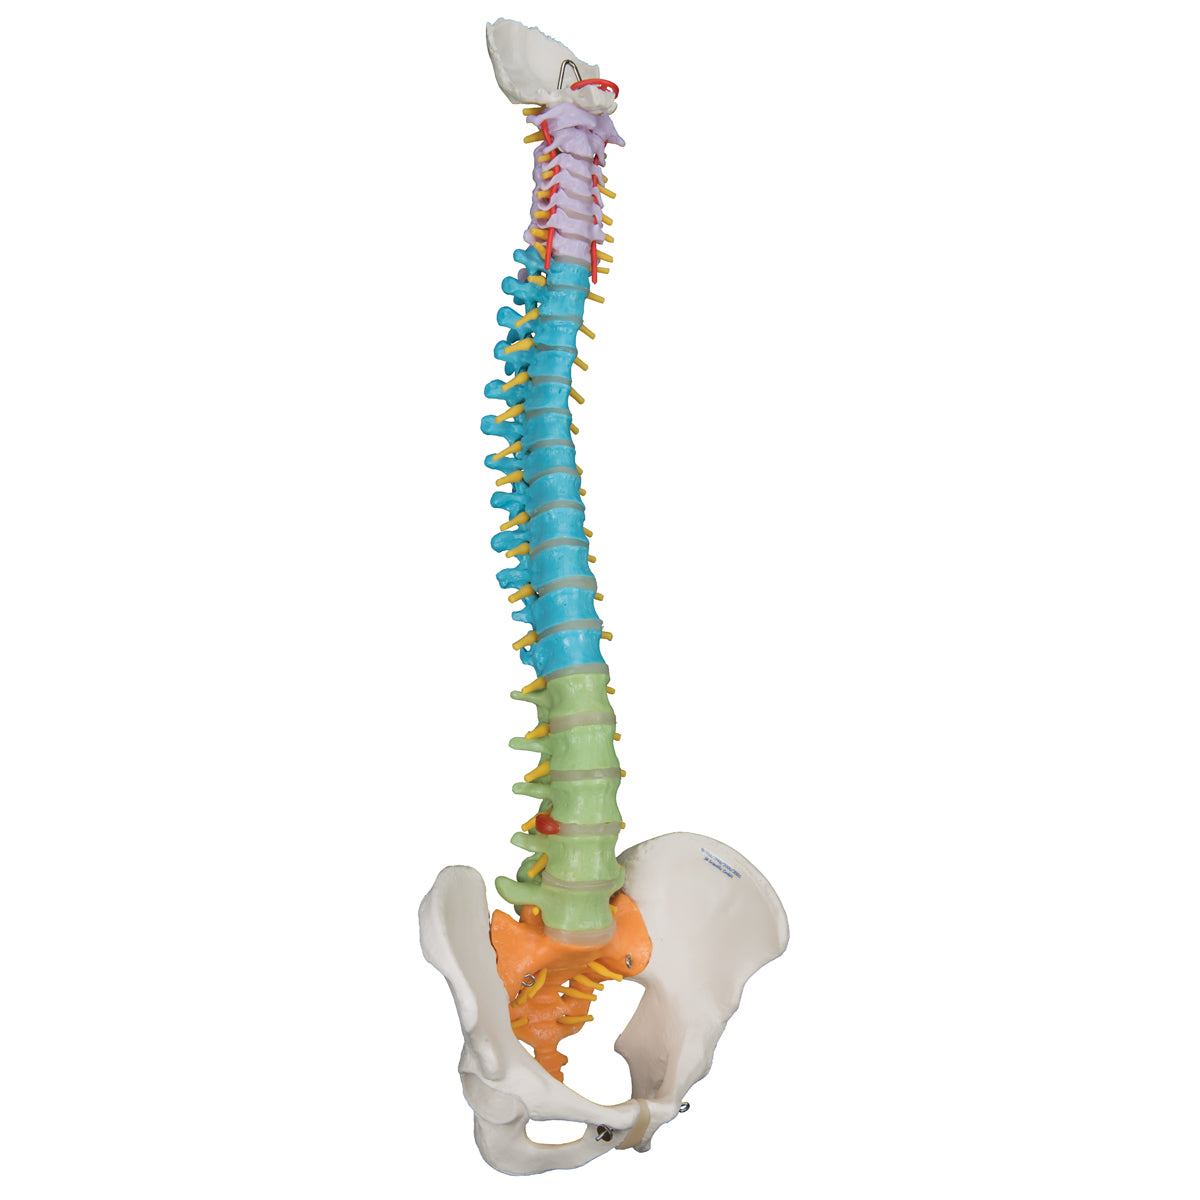 Flexible spine model in adult size incl. pelvis